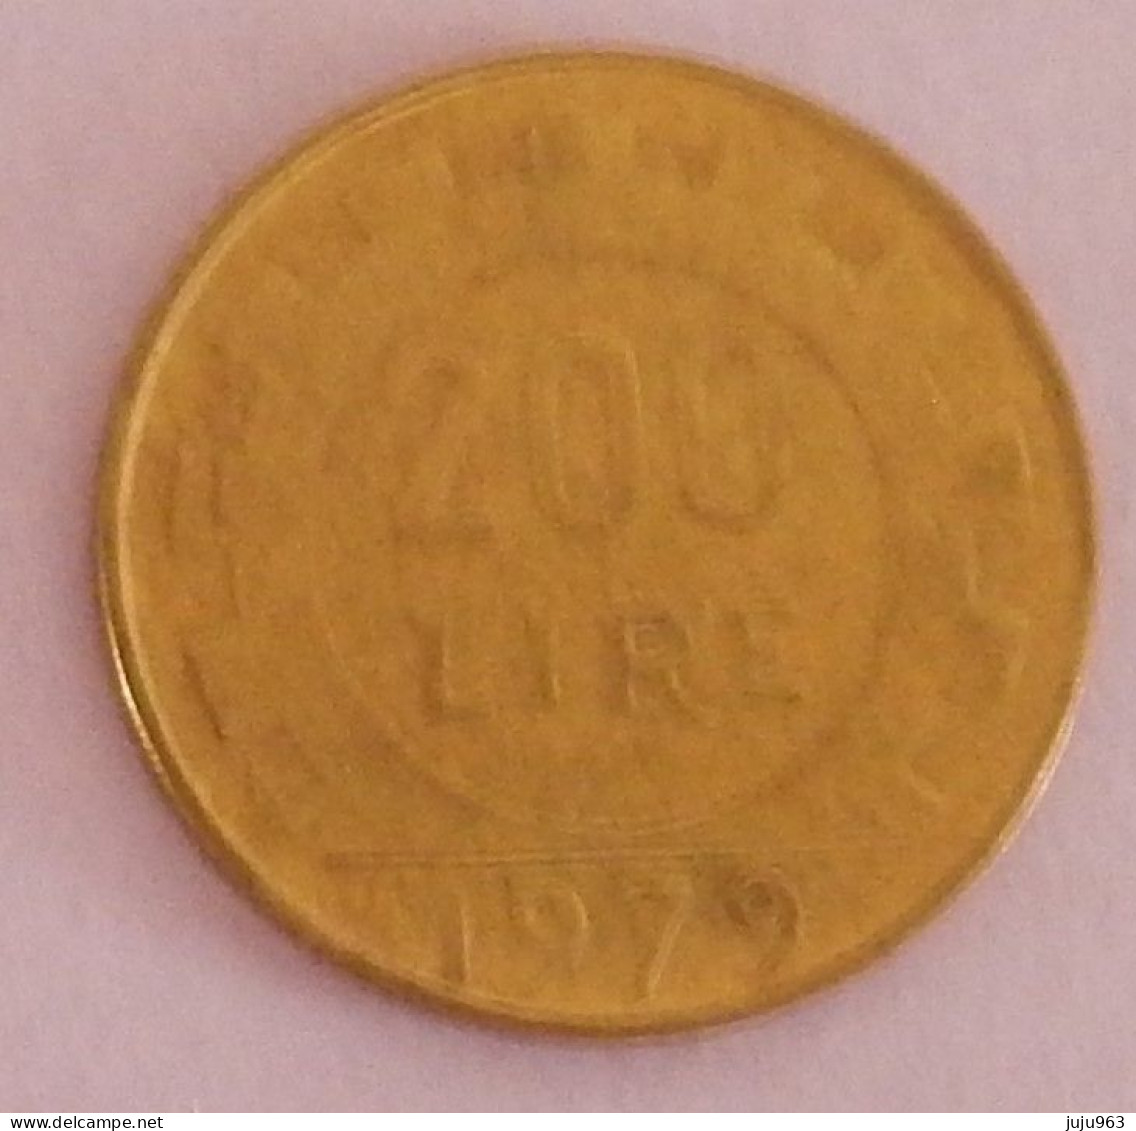 ITALIE 200 LIRE ANNEE 1979 VOIR 2 SCANS - 200 Lire